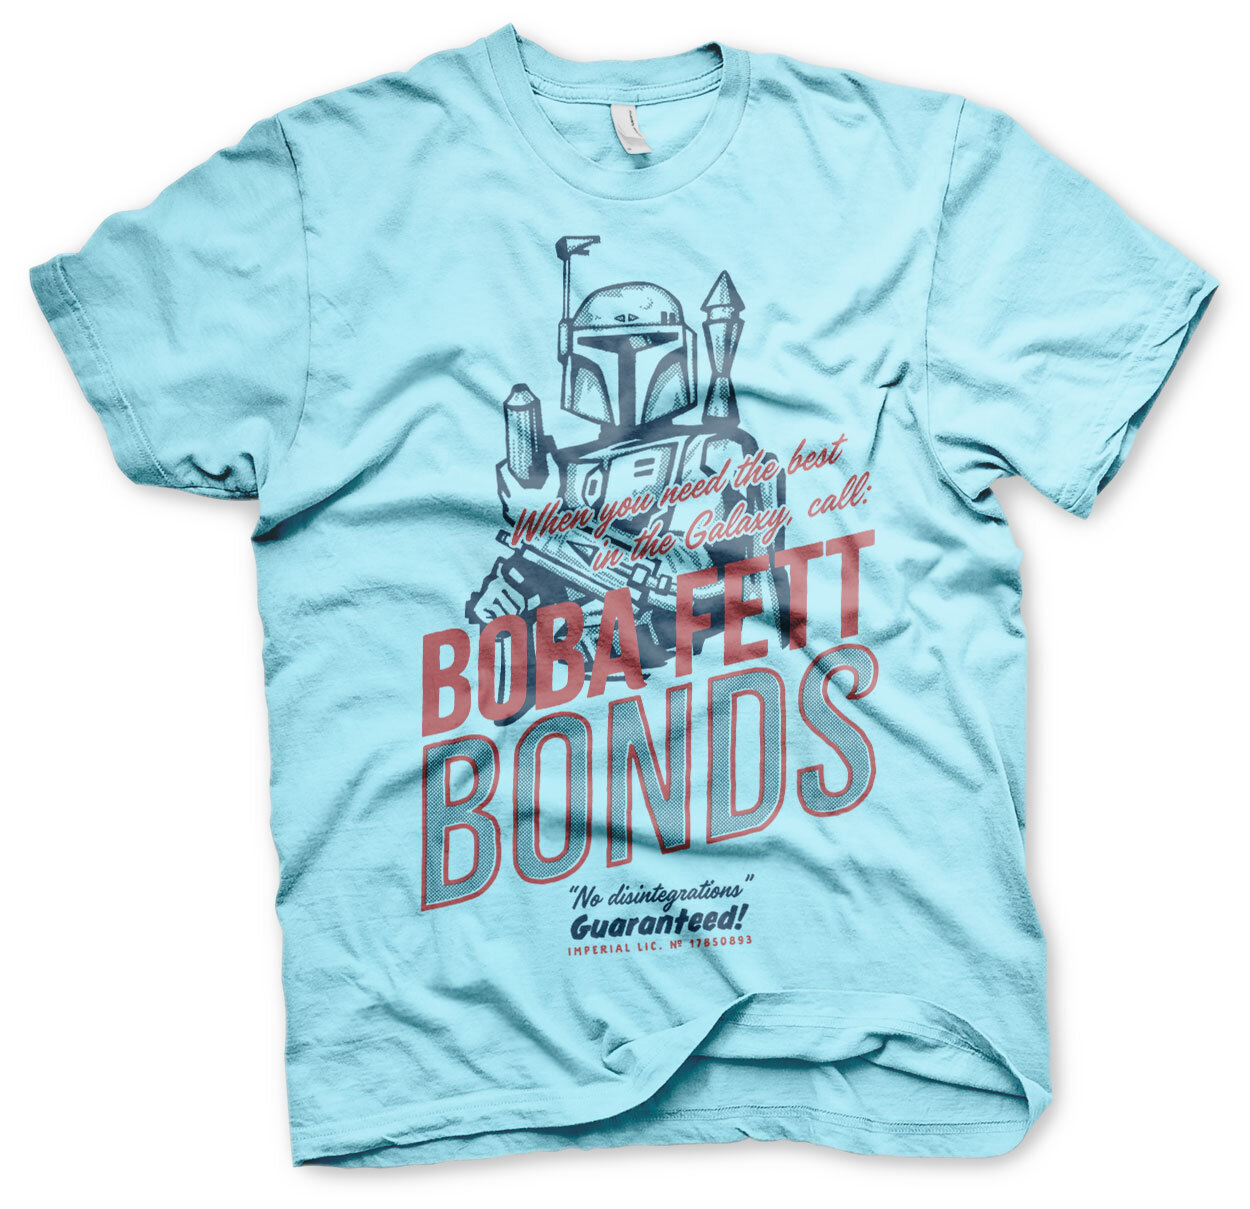 Boba Fett Bonds T-Shirt